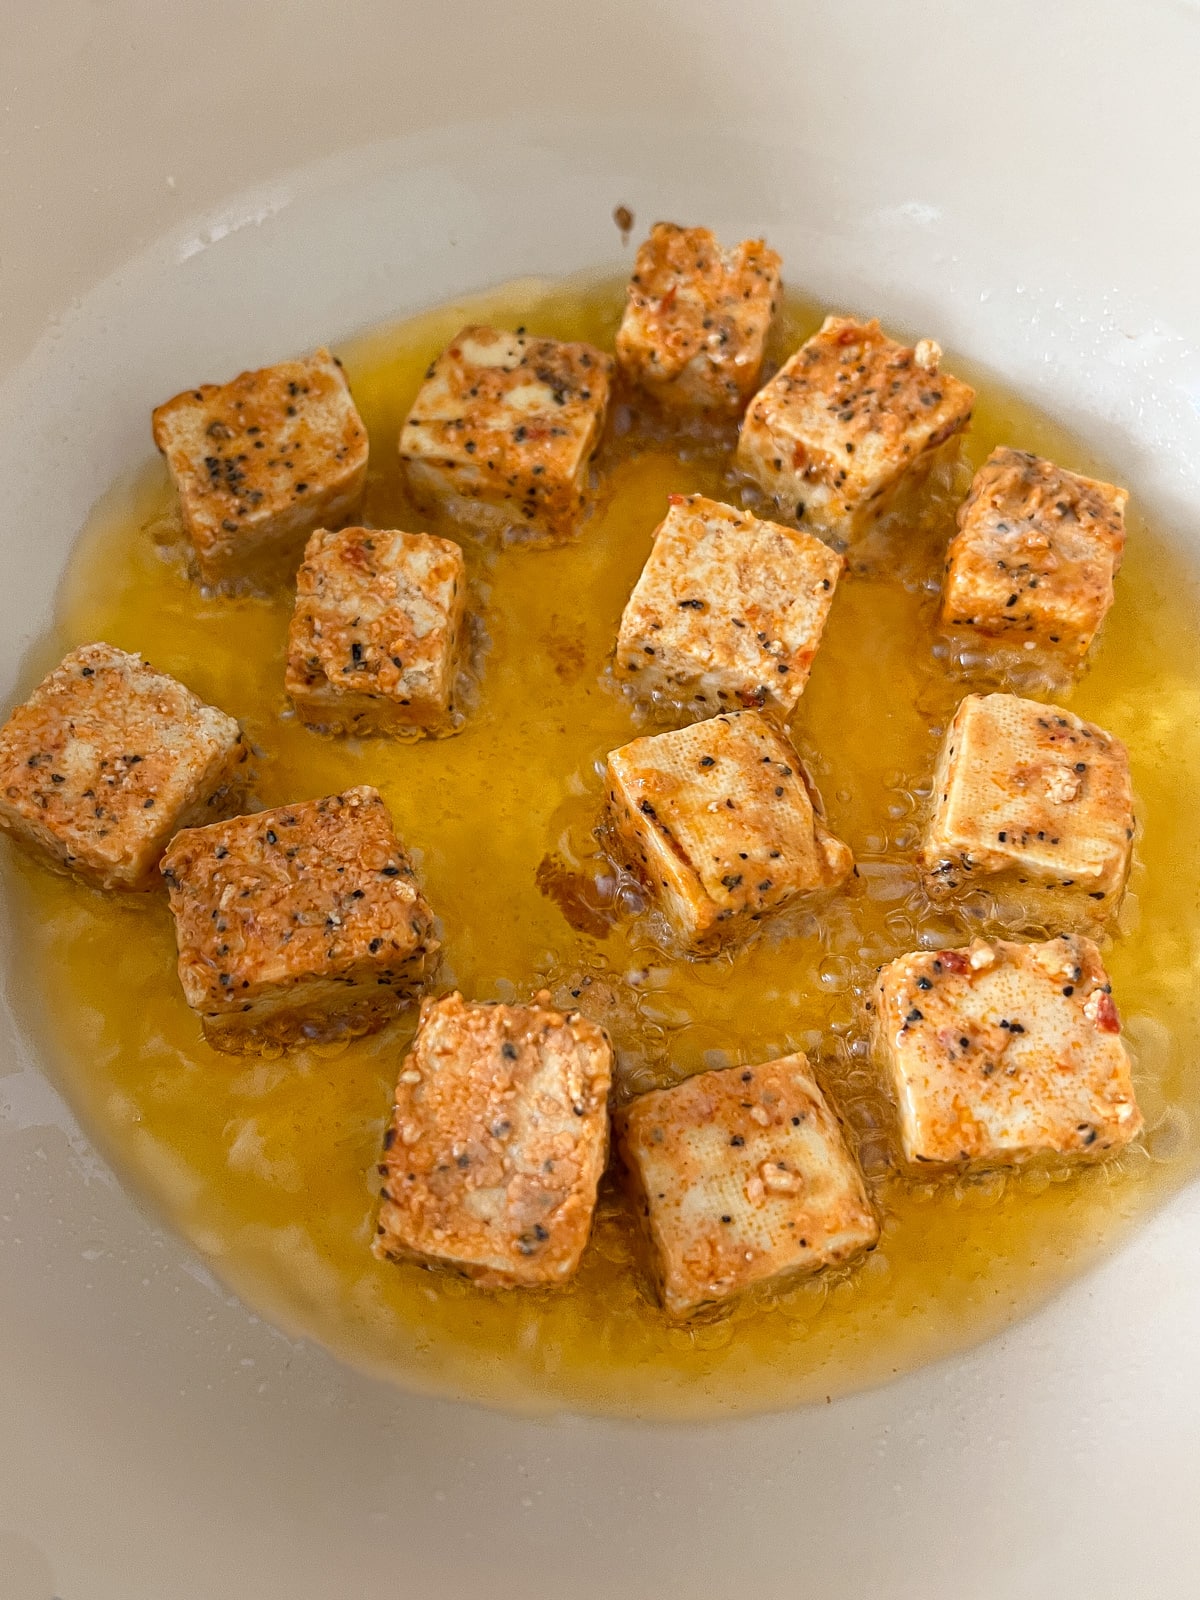 Seasoned tofu cubes being pan fried until brow and crispy.